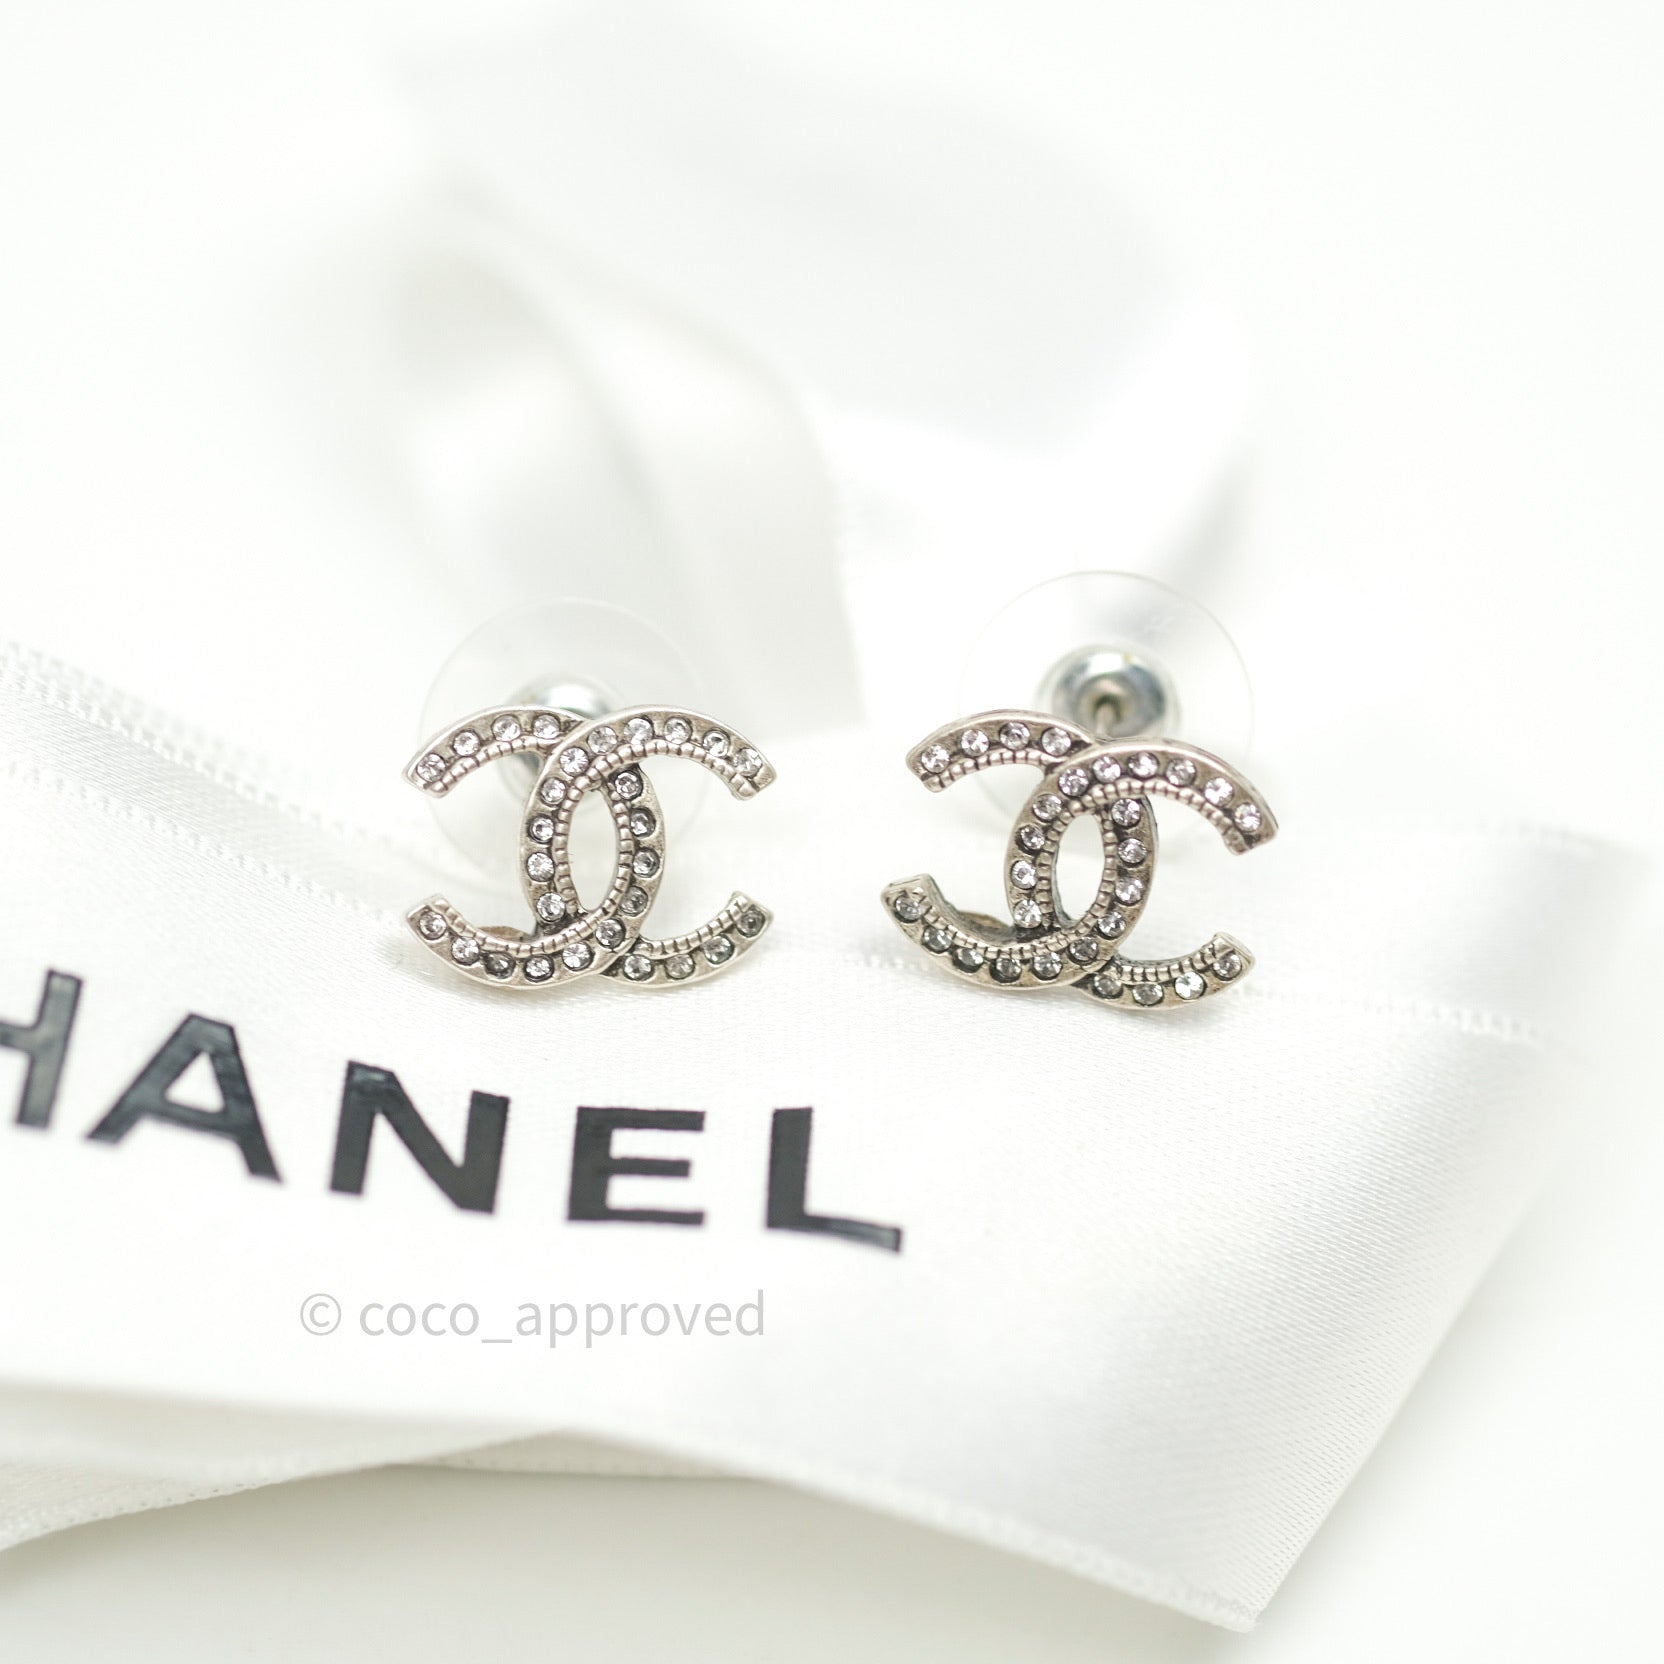 Chanel Classic CC Earrings